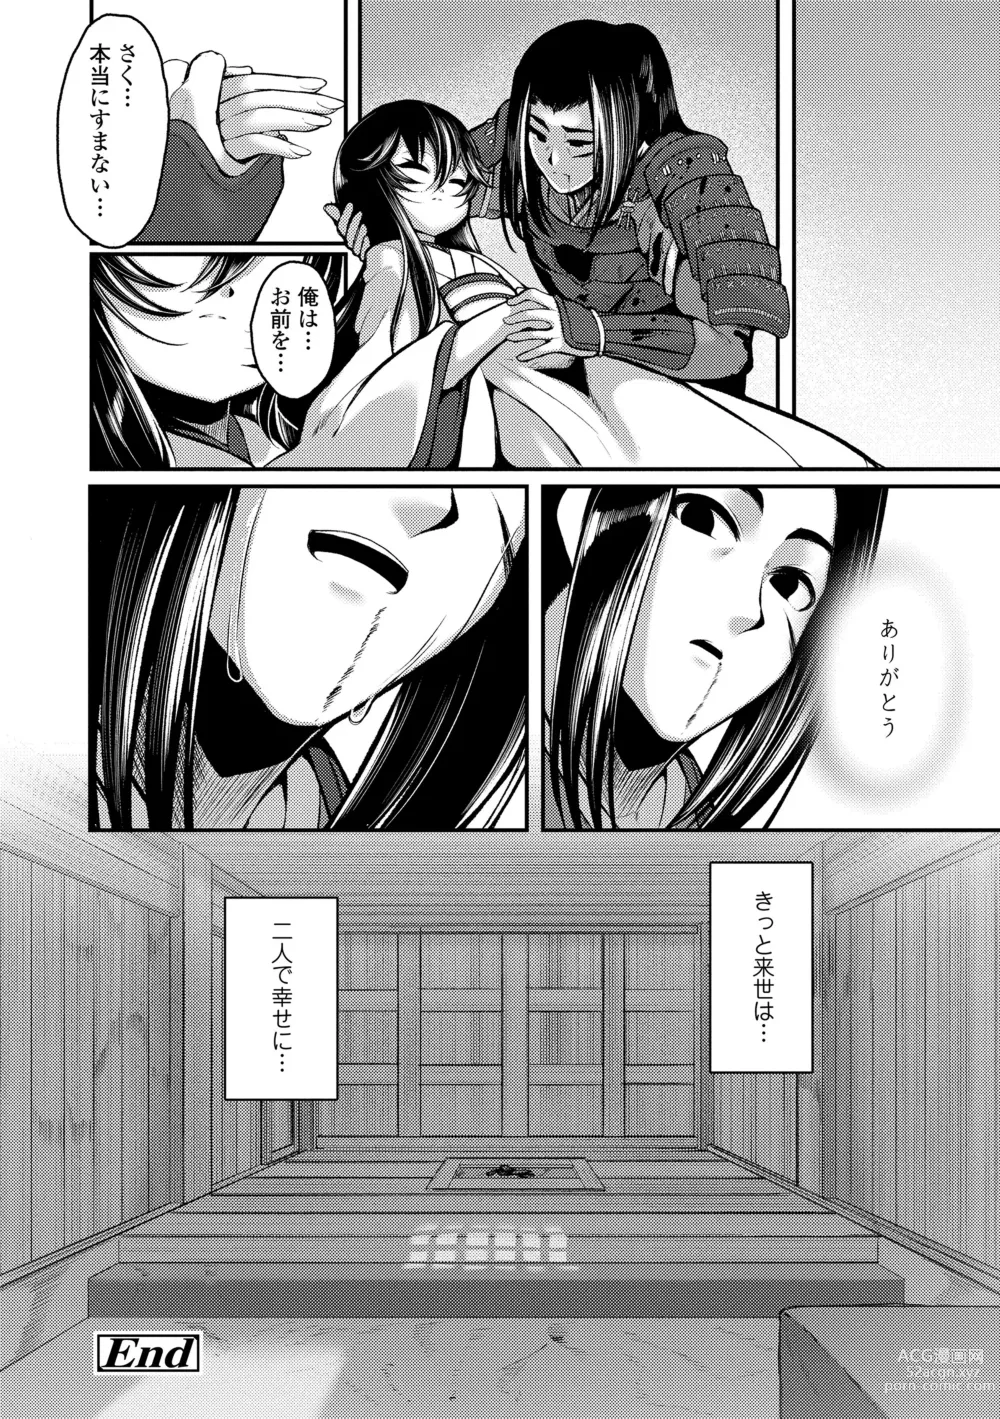 Page 206 of manga Hitoyo Hitoyo Ouse no Mamani